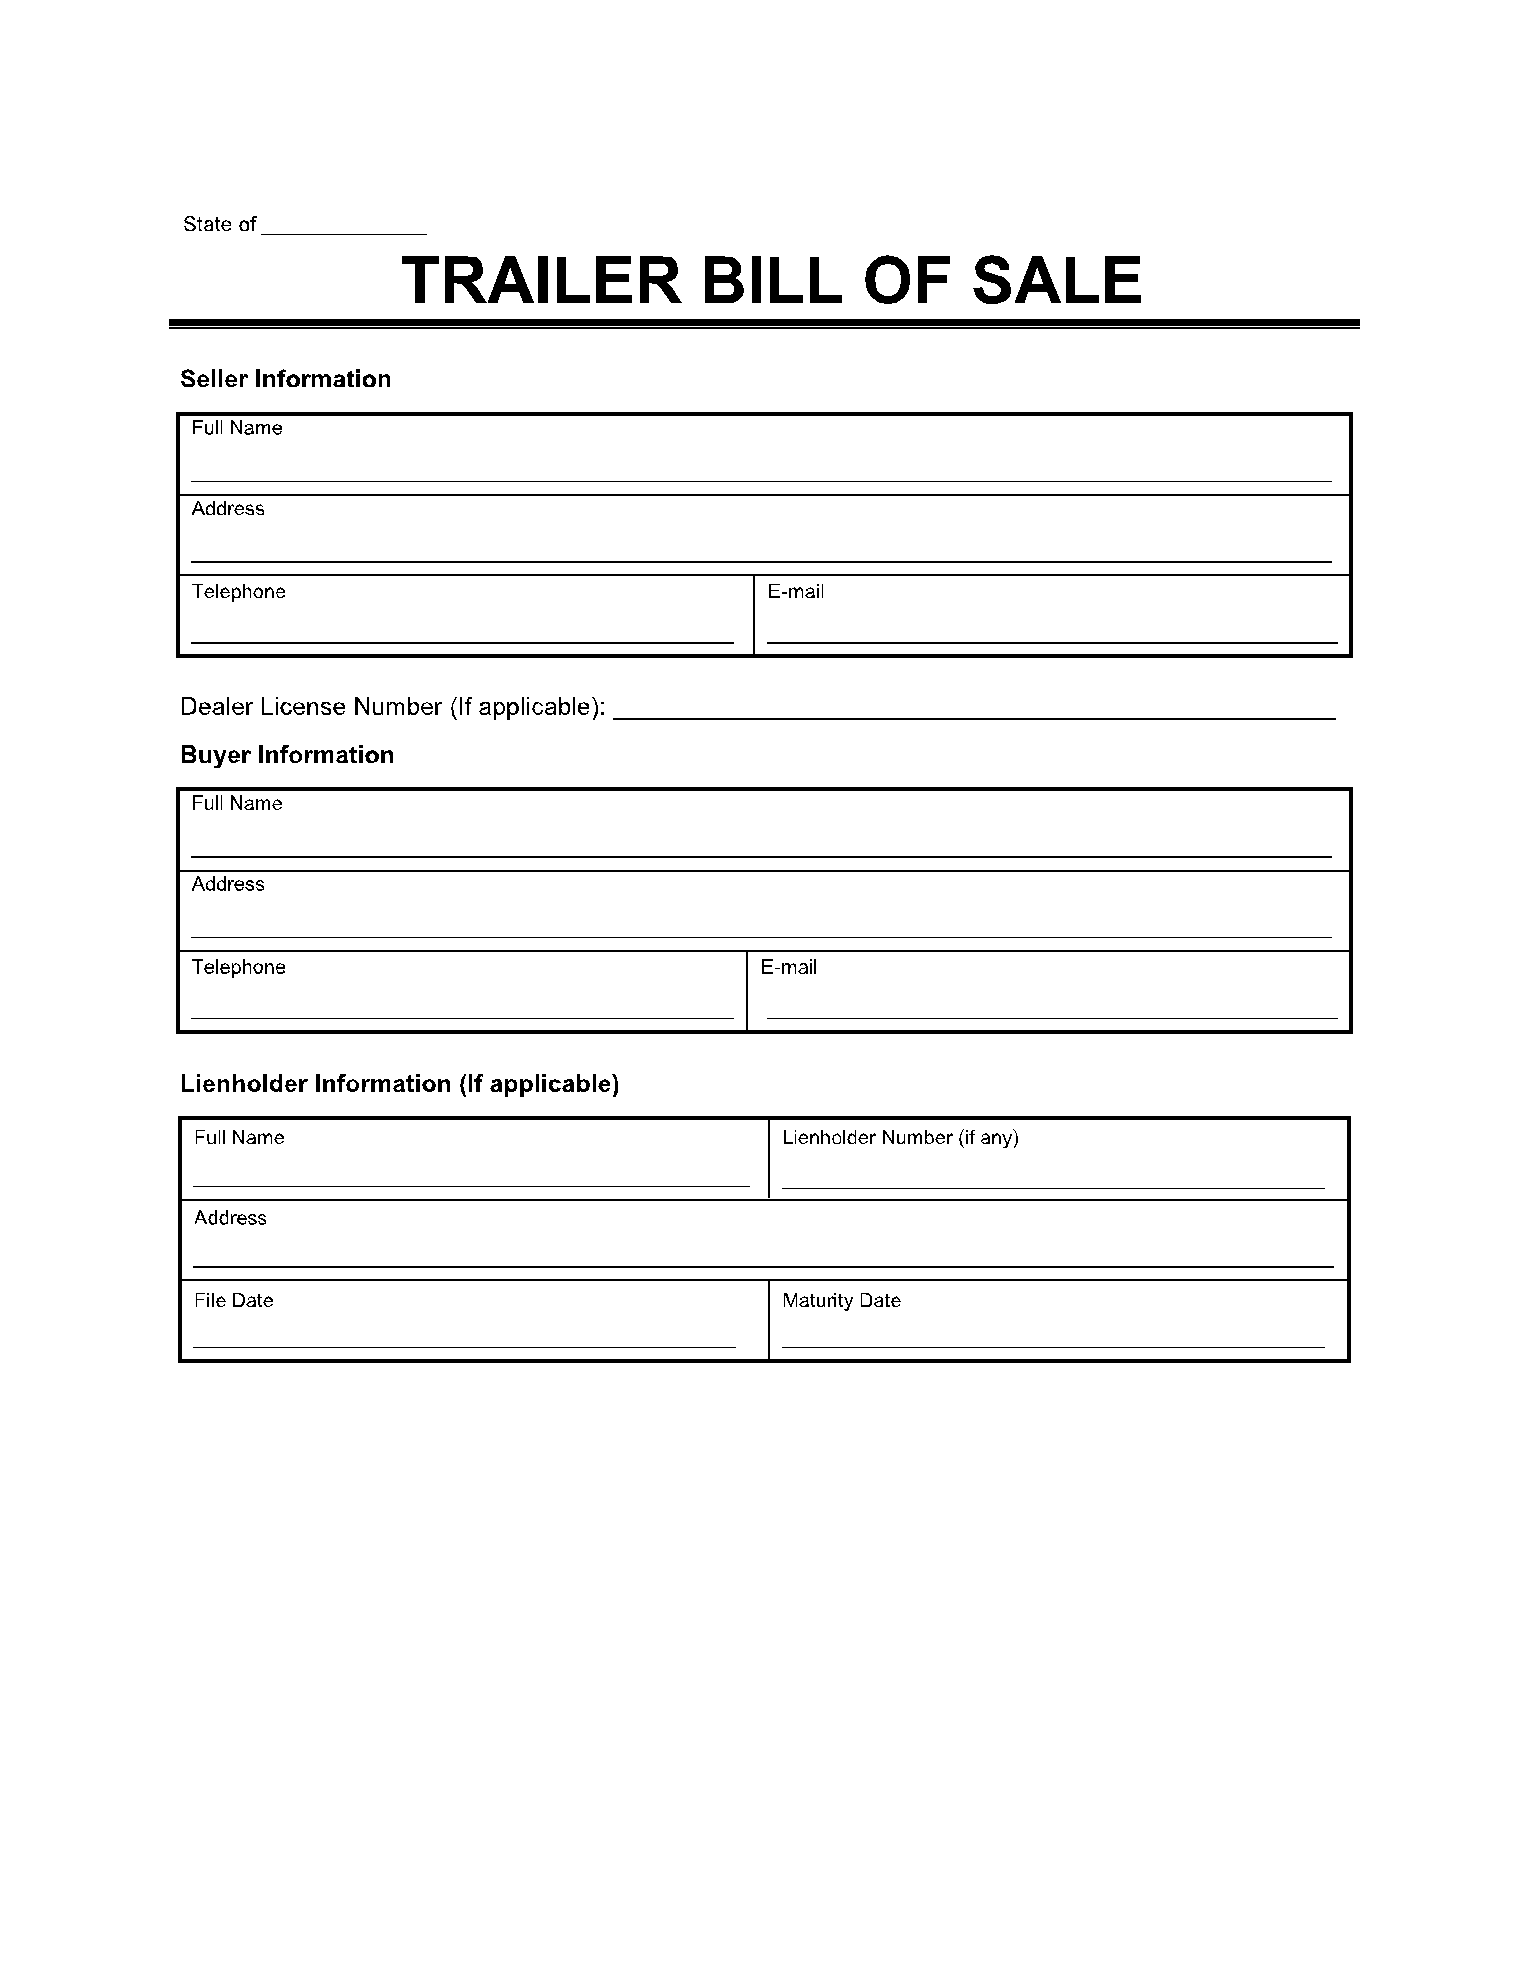 Trailer Bill of Sale Form